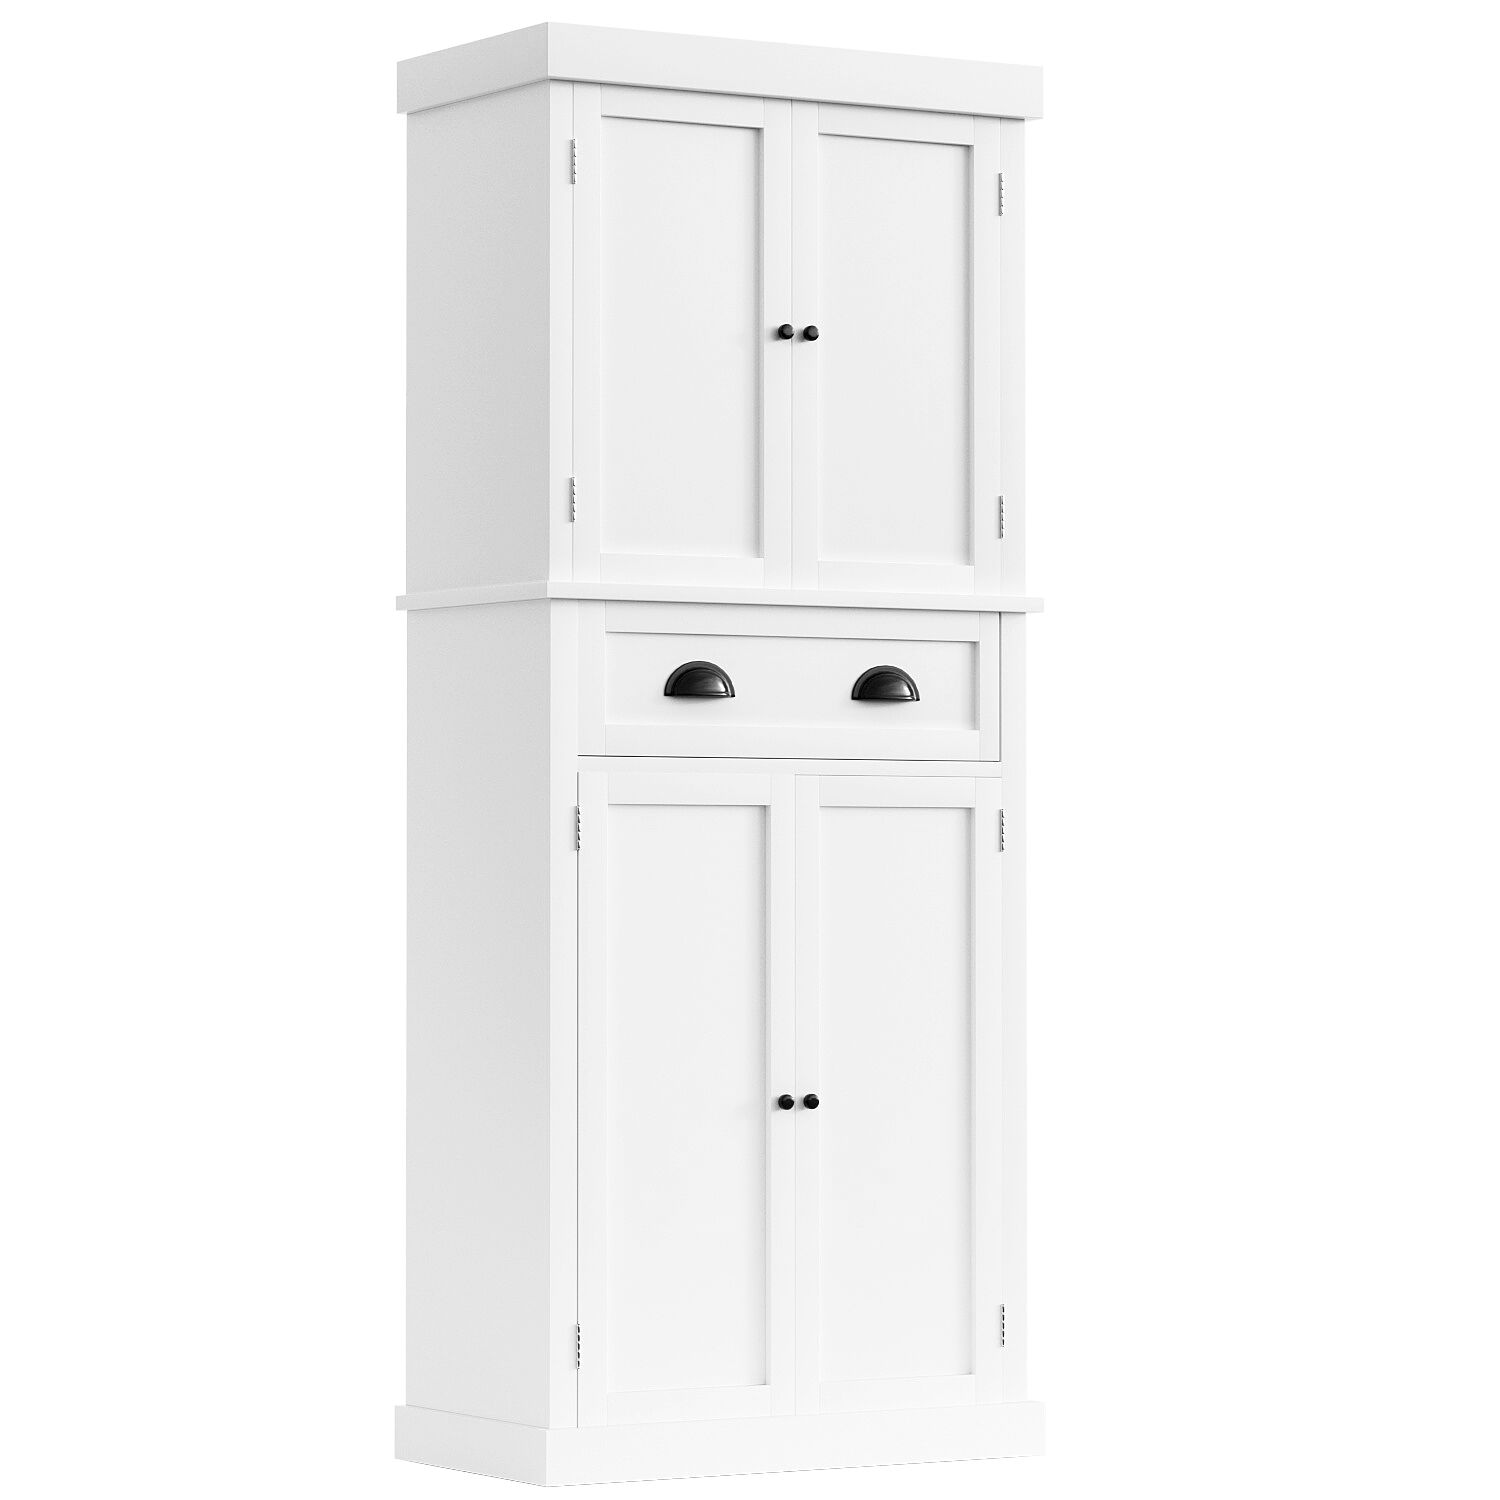 64 Freestanding Tall Kitchen Pantry Cabinet Corner Bar Wine Storage Cabinet